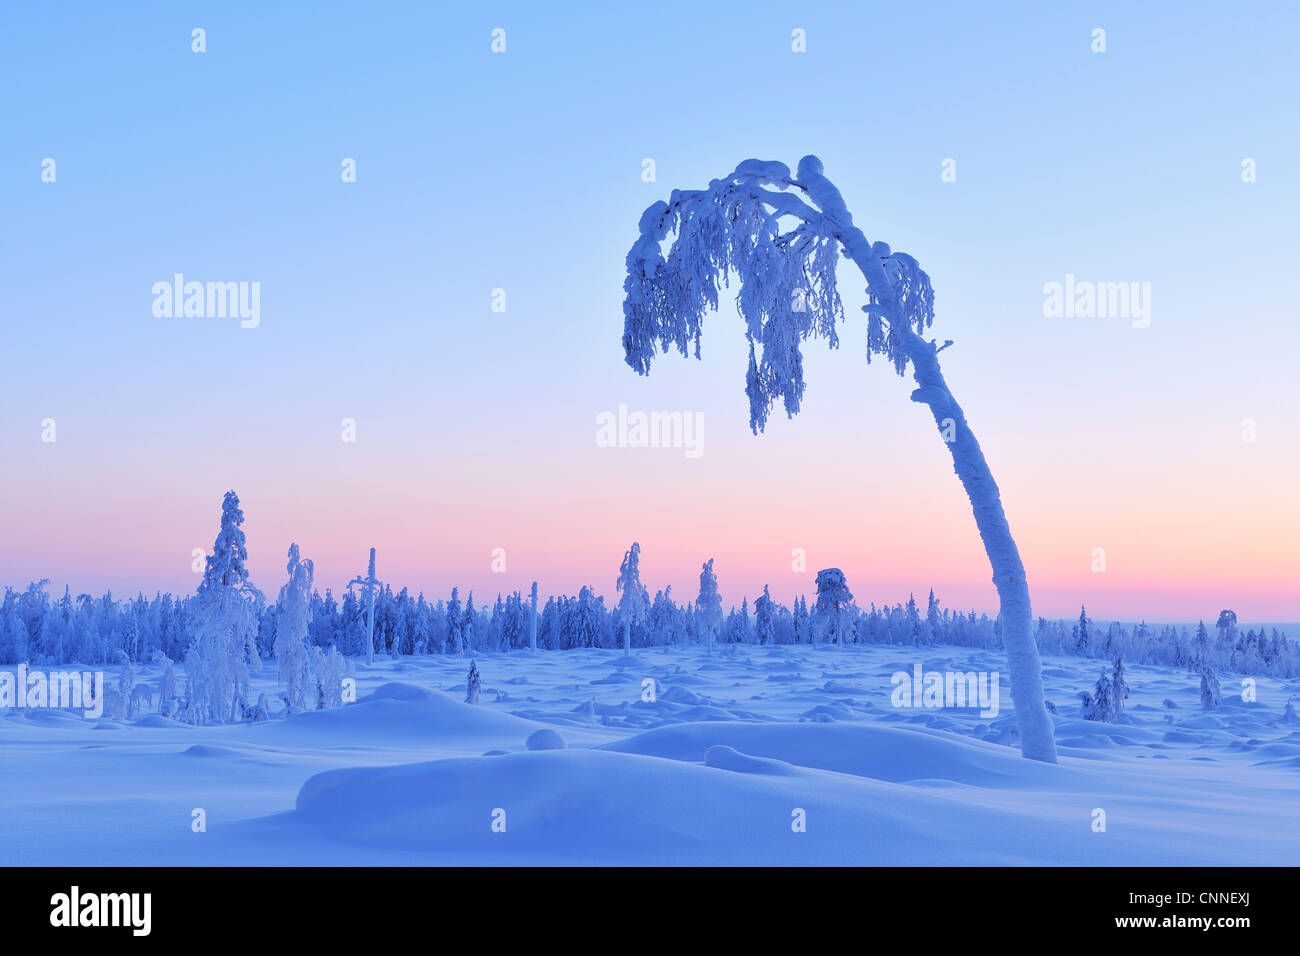 Coperta di neve albero al tramonto, Nissi, Pohjois-Pohjanmaa, Finlandia Foto Stock